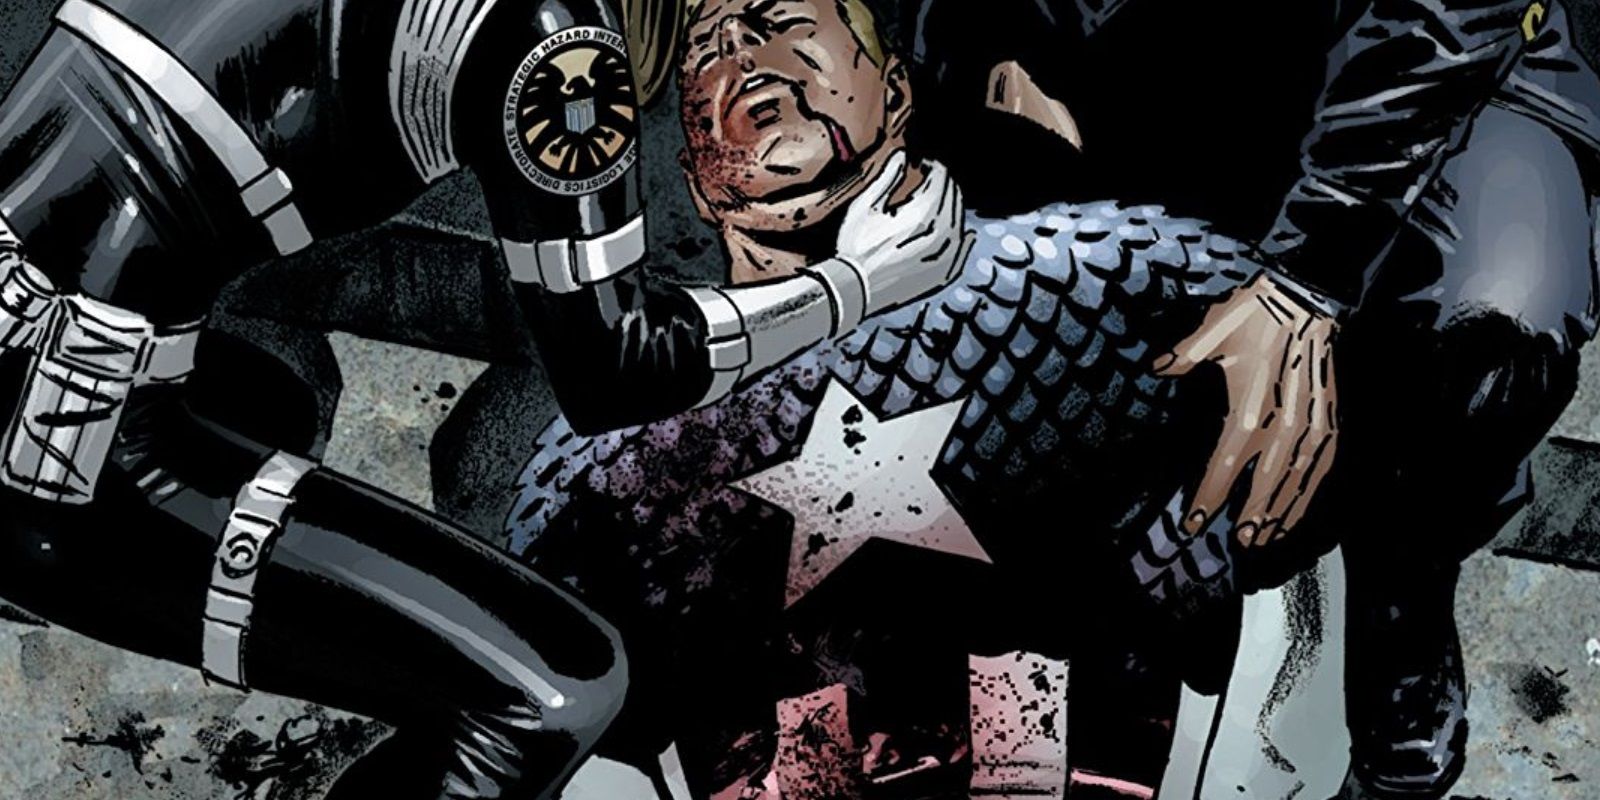 Captain America lying dead in Marvel comics